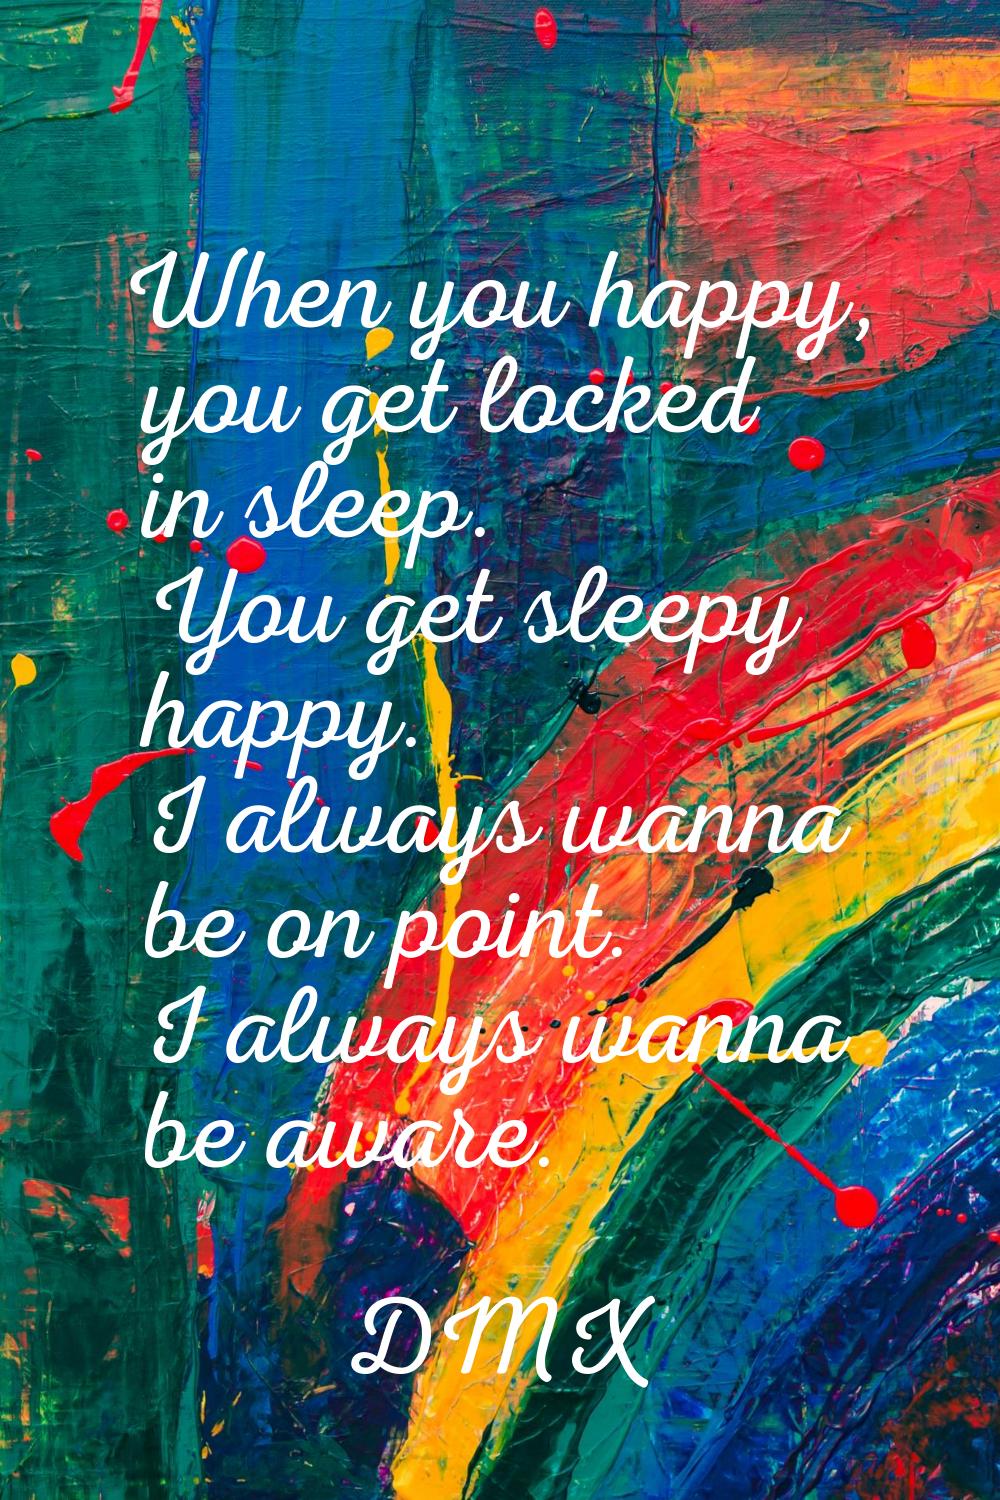 When you happy, you get locked in sleep. You get sleepy happy. I always wanna be on point. I always